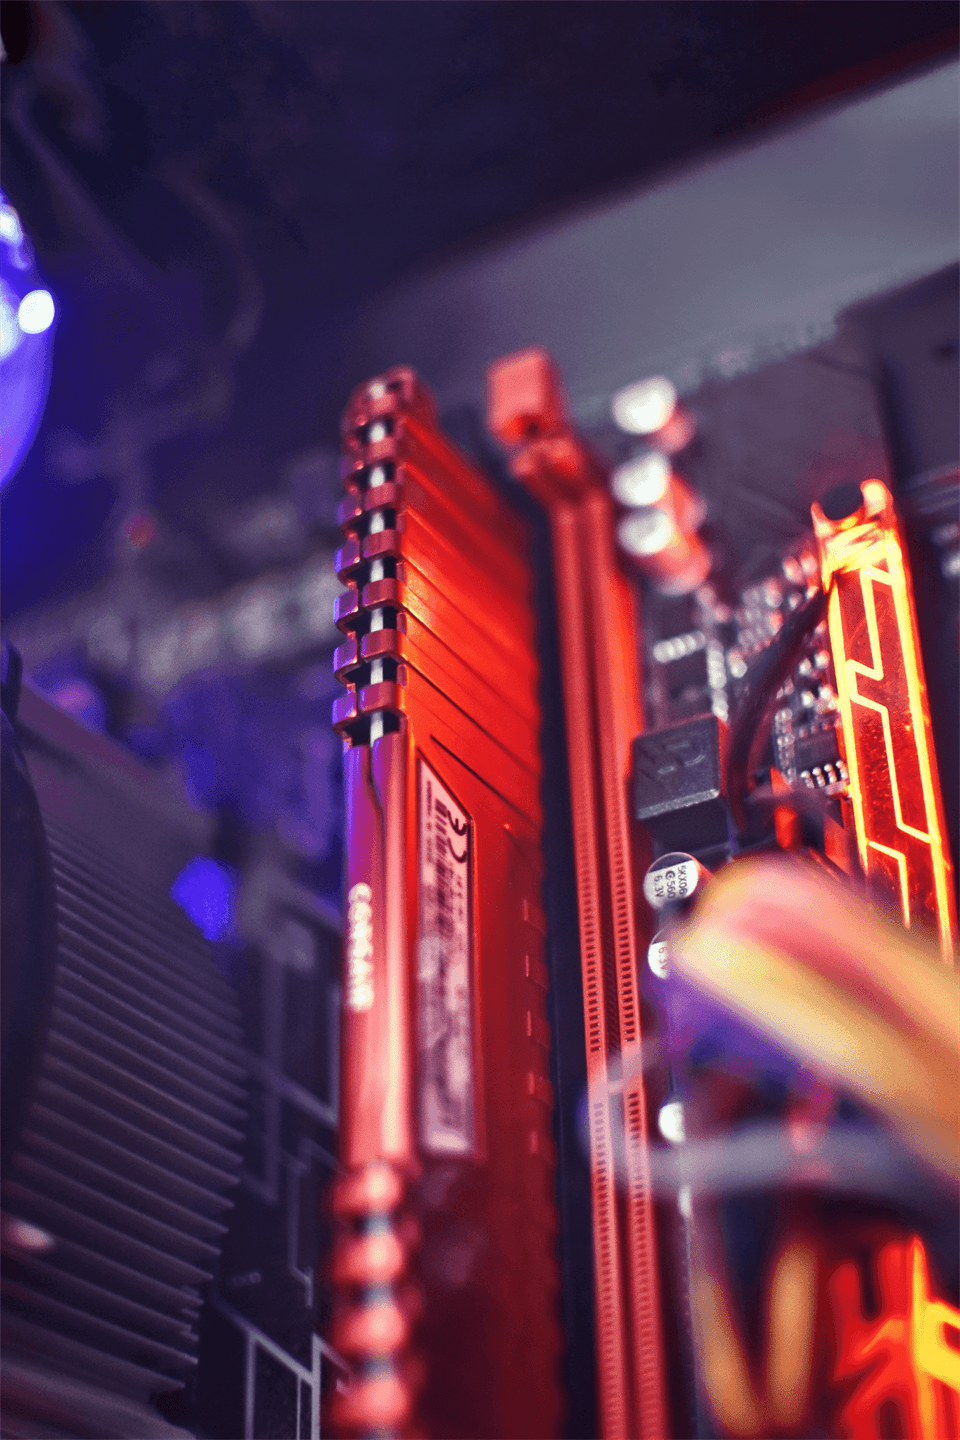 RGB RAM memory for gaming PC setups